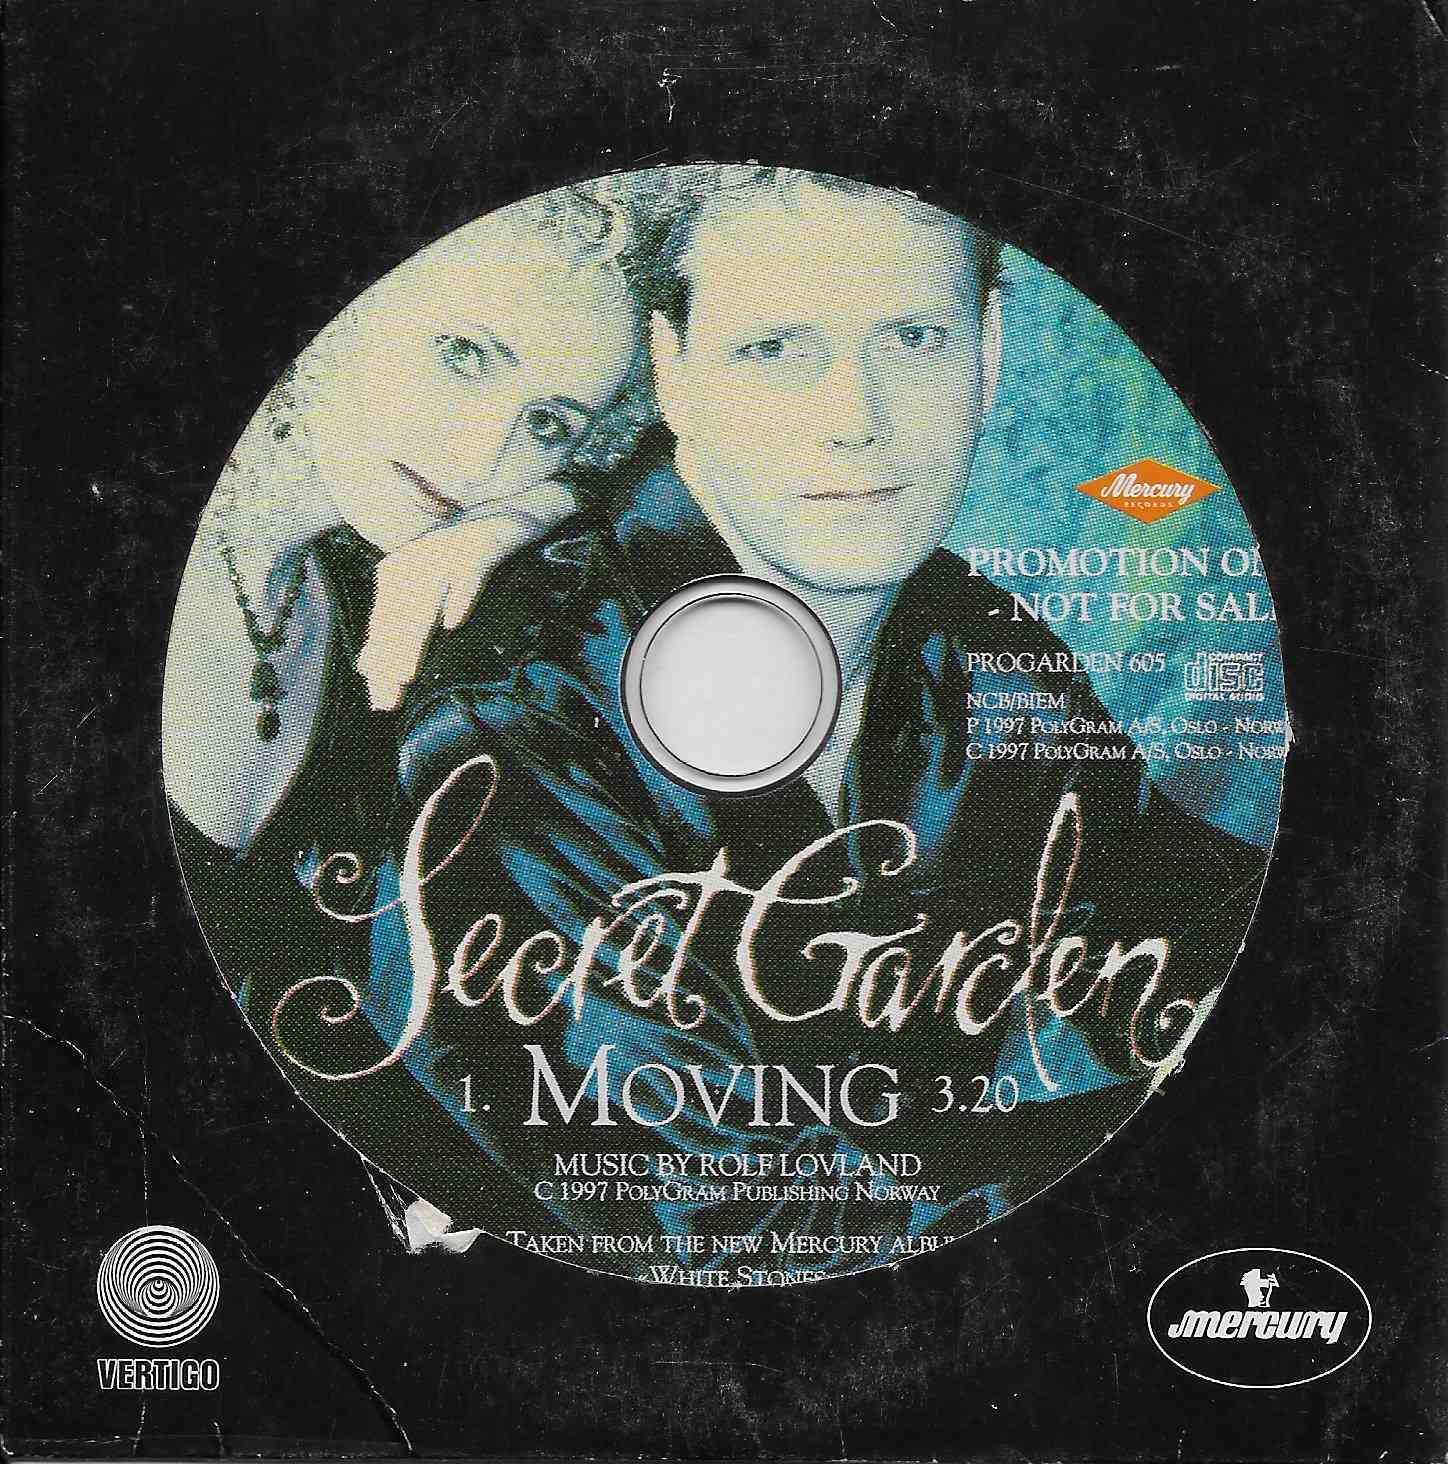 Picture of PROGARDEN 605 Moving - Promotional disc by artist Secret Garden